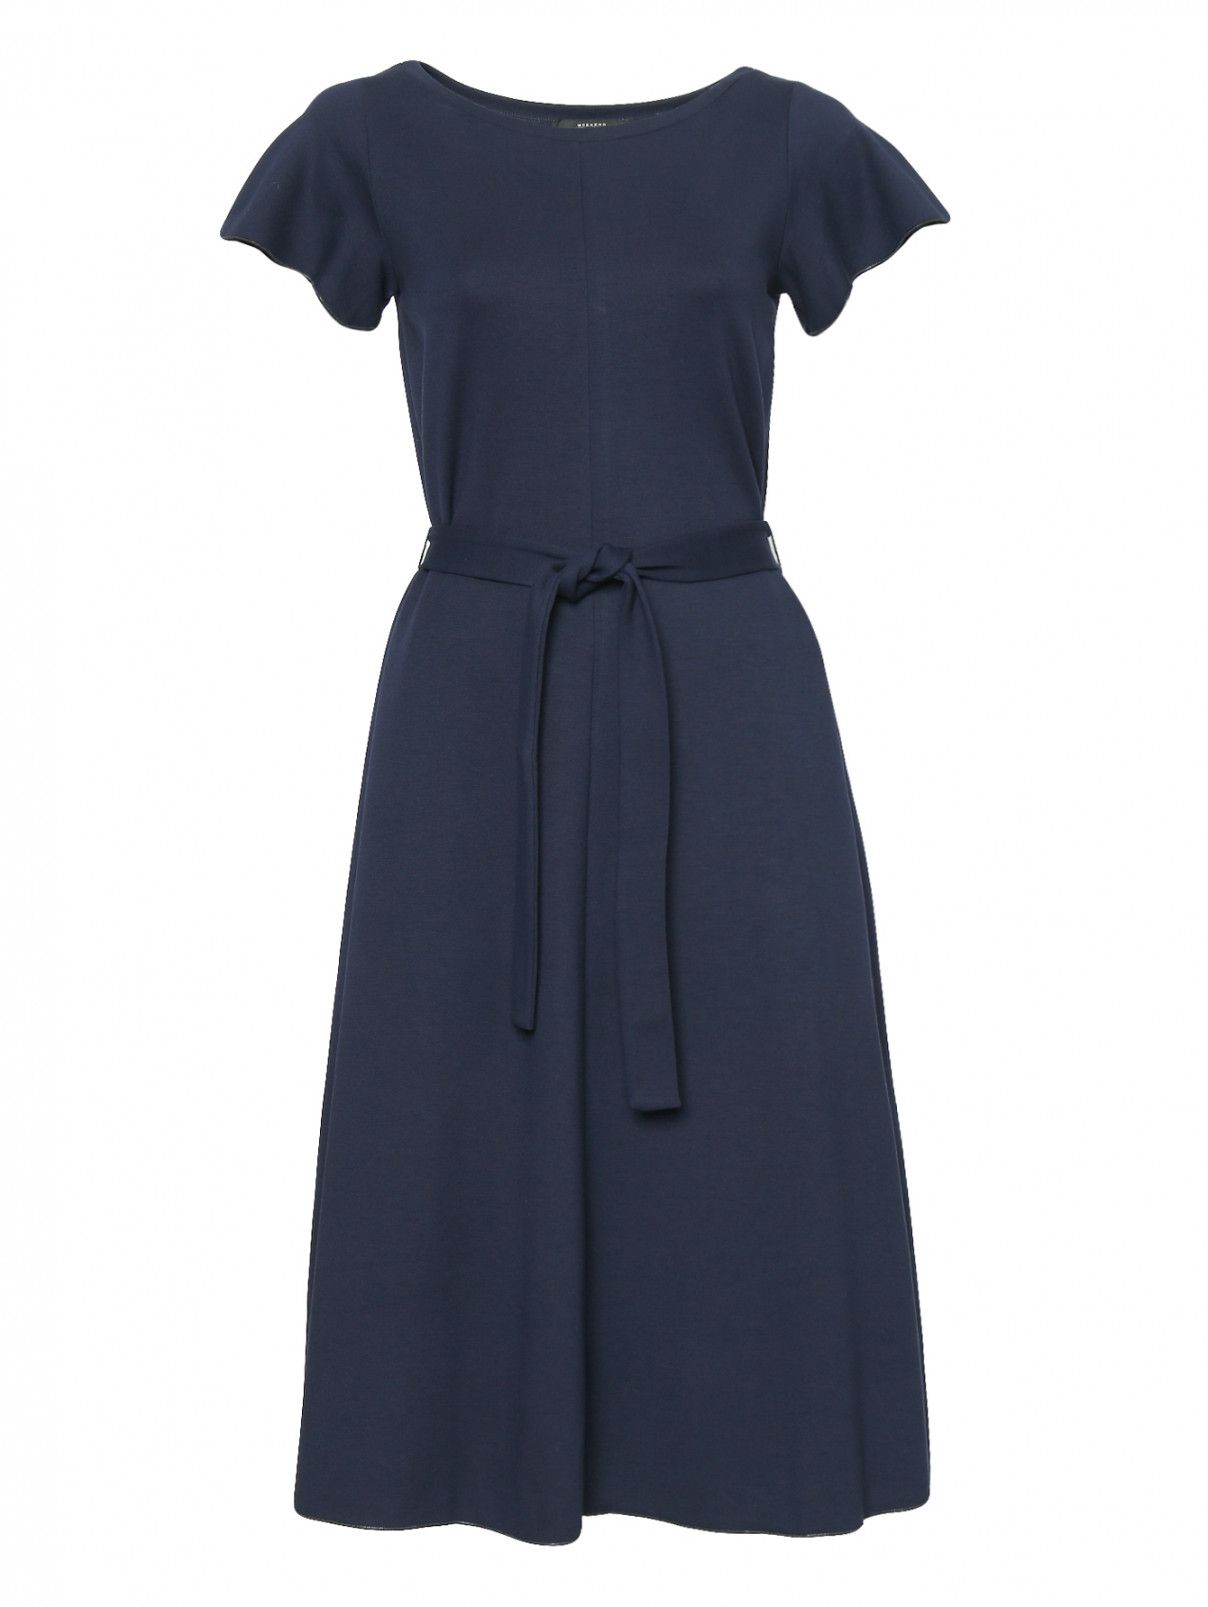 Платье-миди с короткими рукавами Weekend Max Mara  –  Общий вид  – Цвет:  Синий